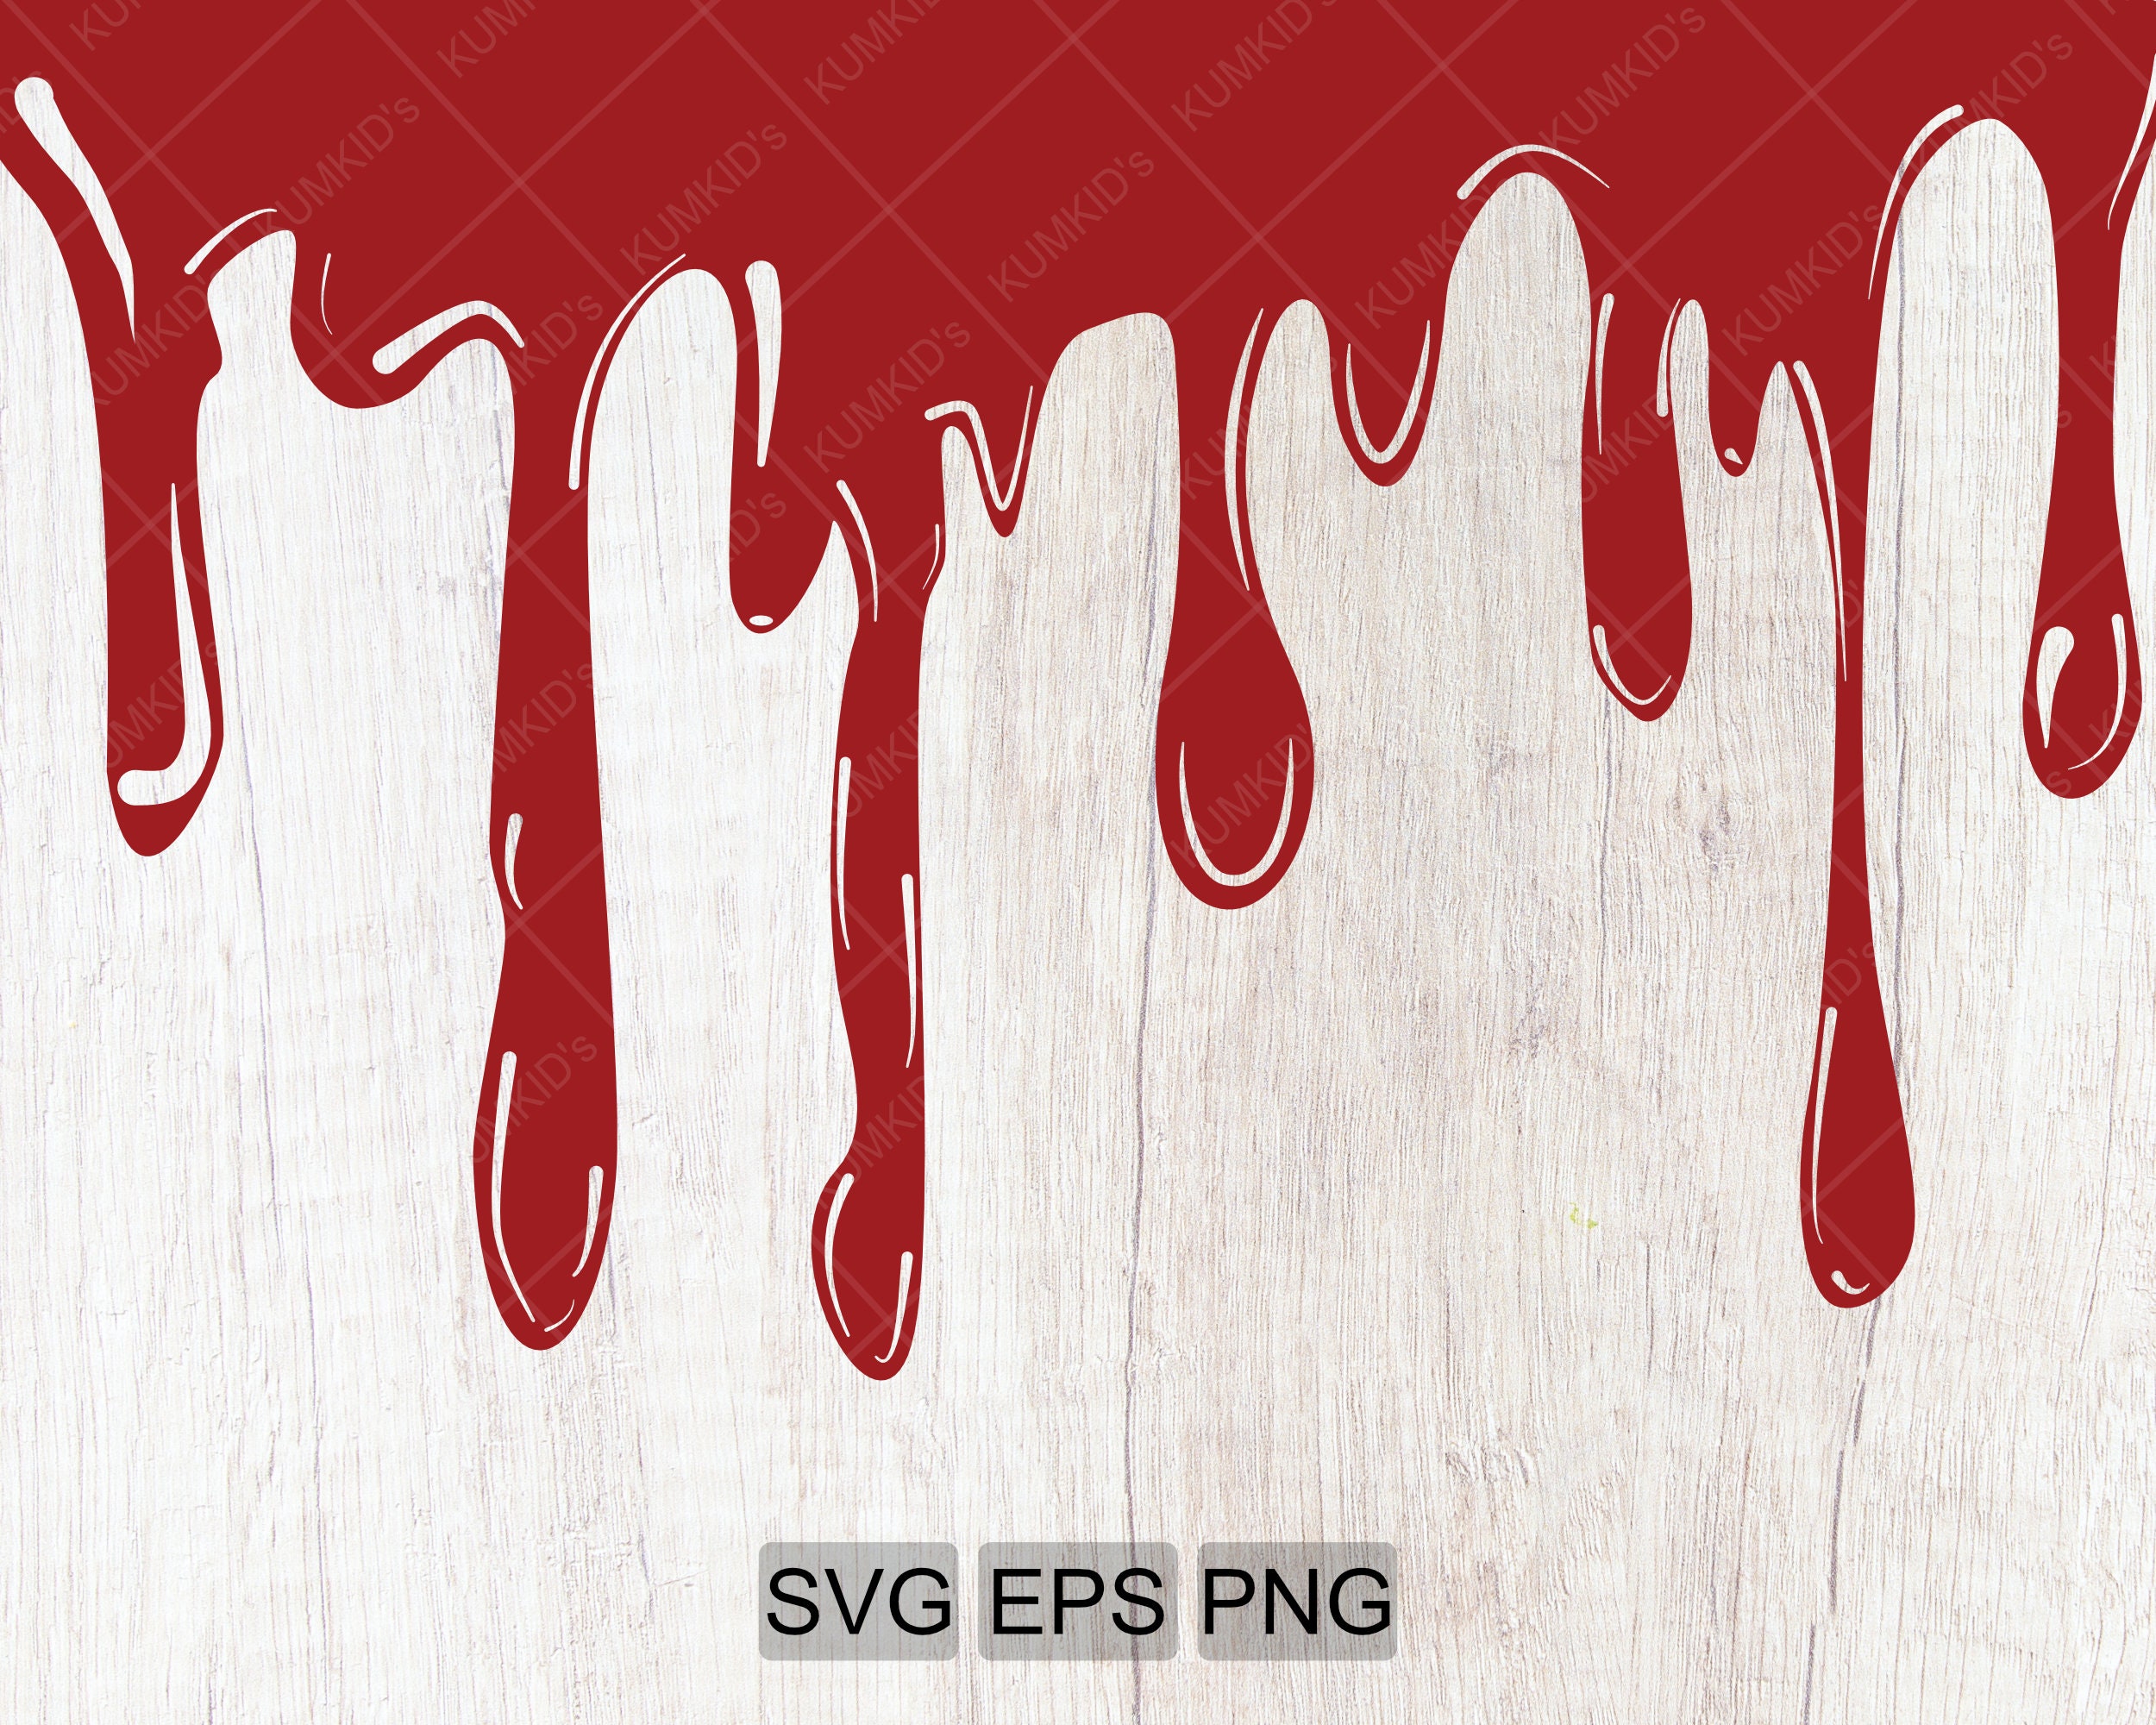 Blood Drop SVG Cut File, Blood Svg, Blood Drop Silhouette, Blood Line Drip  Svg, Dripping Drop Svg, Outline Stock Vector